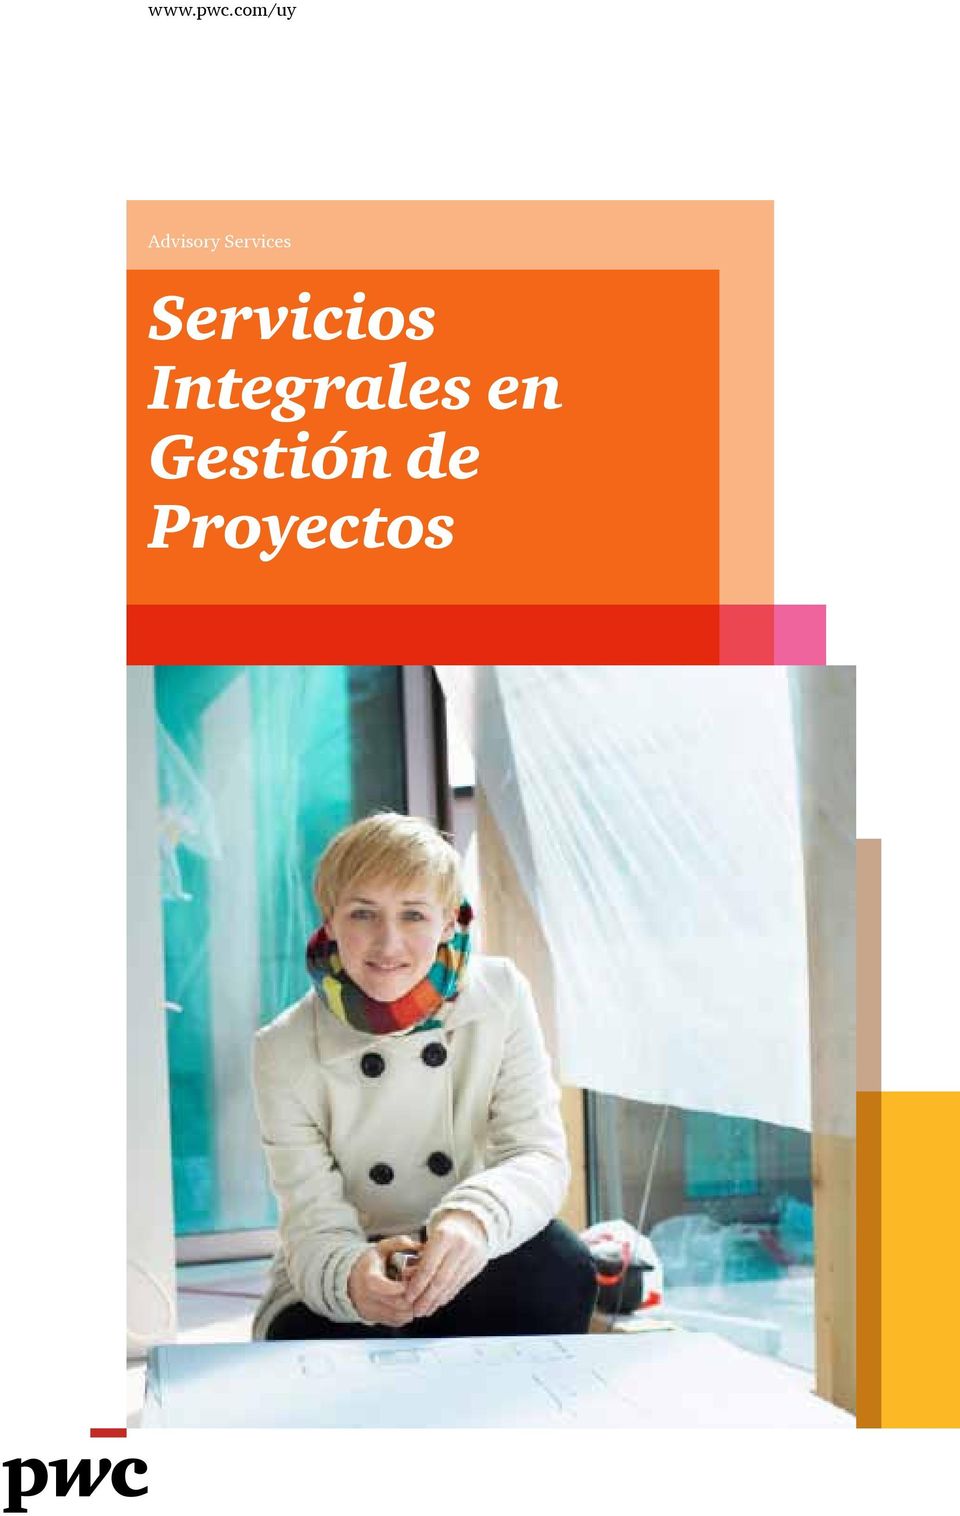 Services Servicios